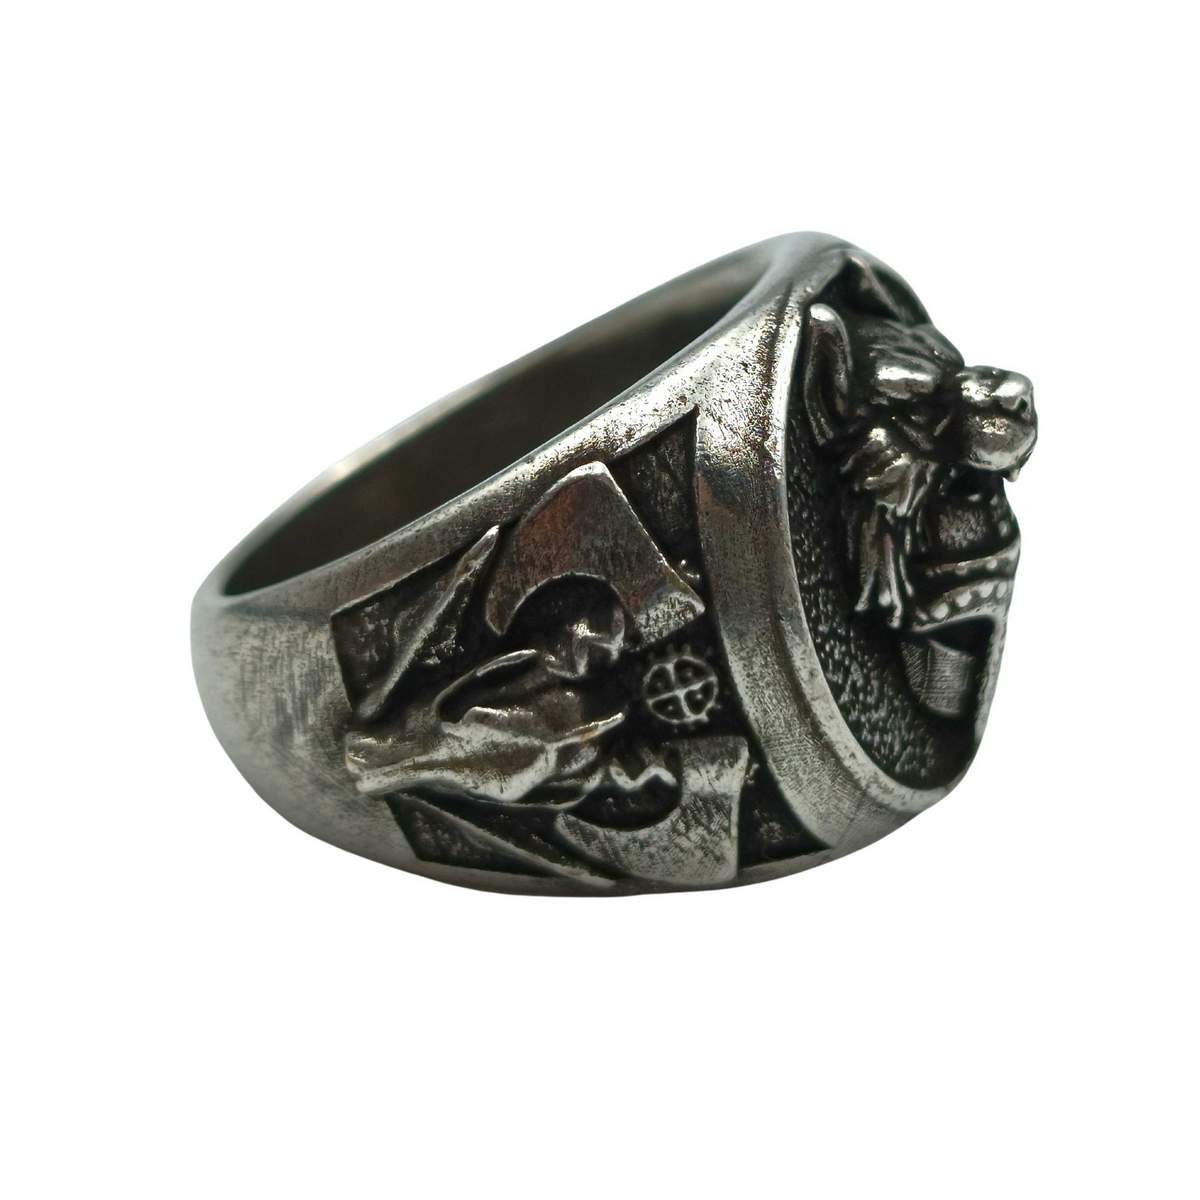 Viking warrior wolf ring from bronze